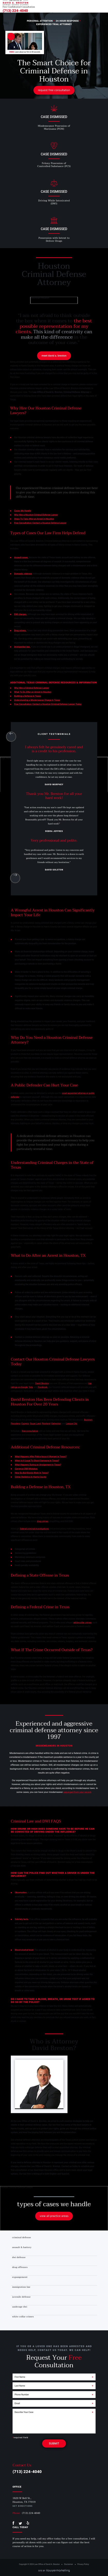 Breston, David A - Houston TX Lawyers